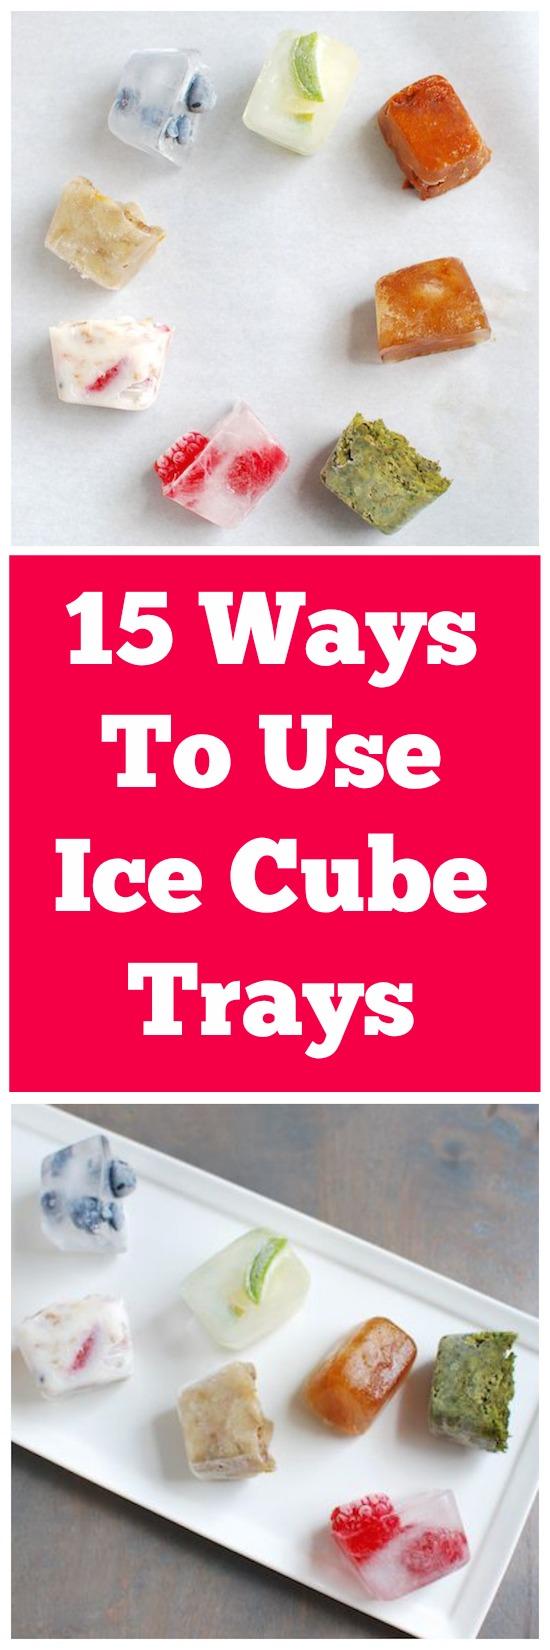 8 Brilliant Ice Cube Tray Hacks - Reviewed